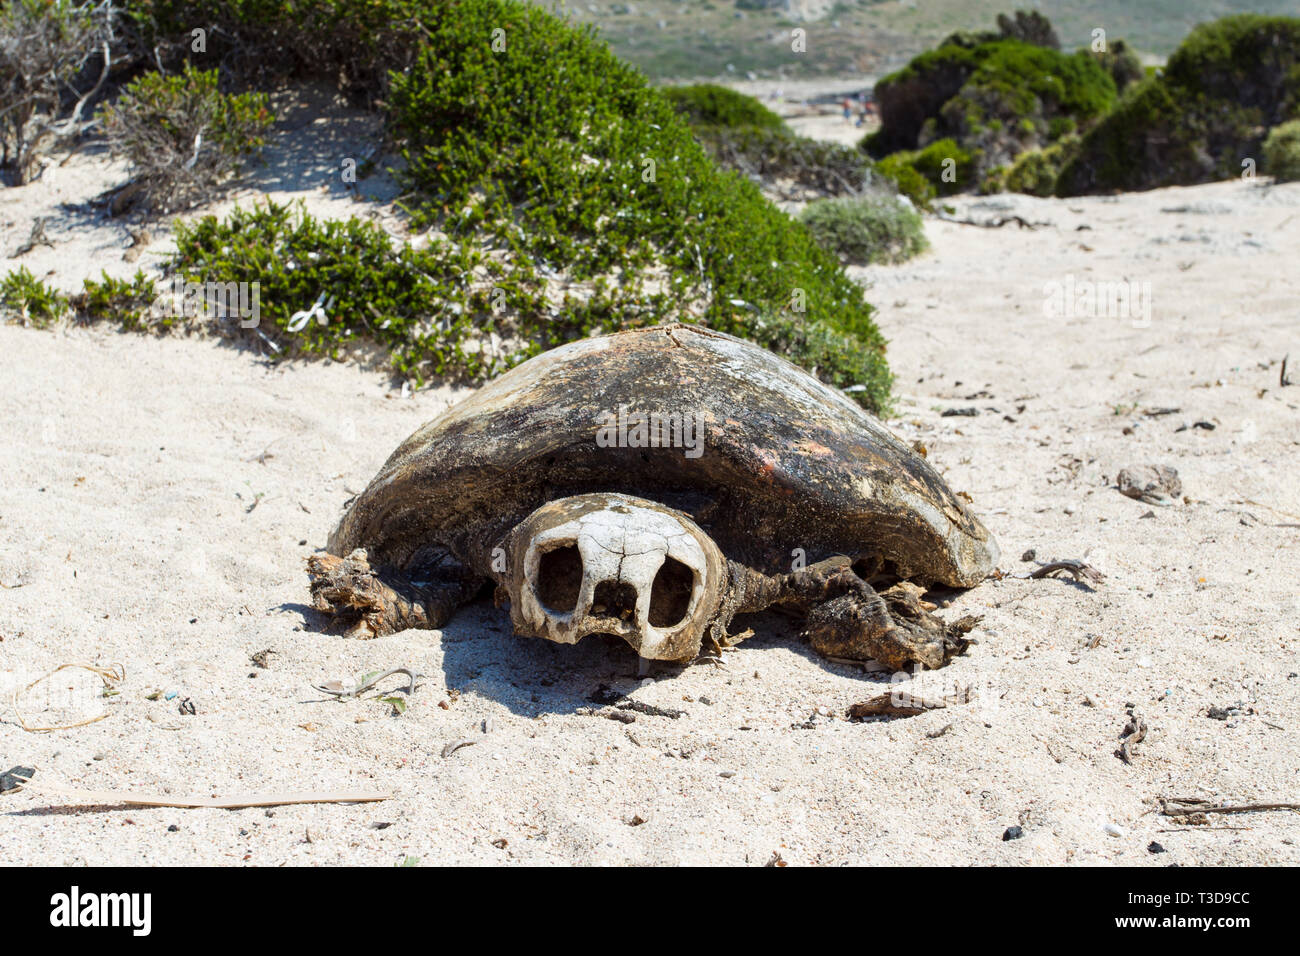 Tote Schildkroete, death turtle Stock Photo